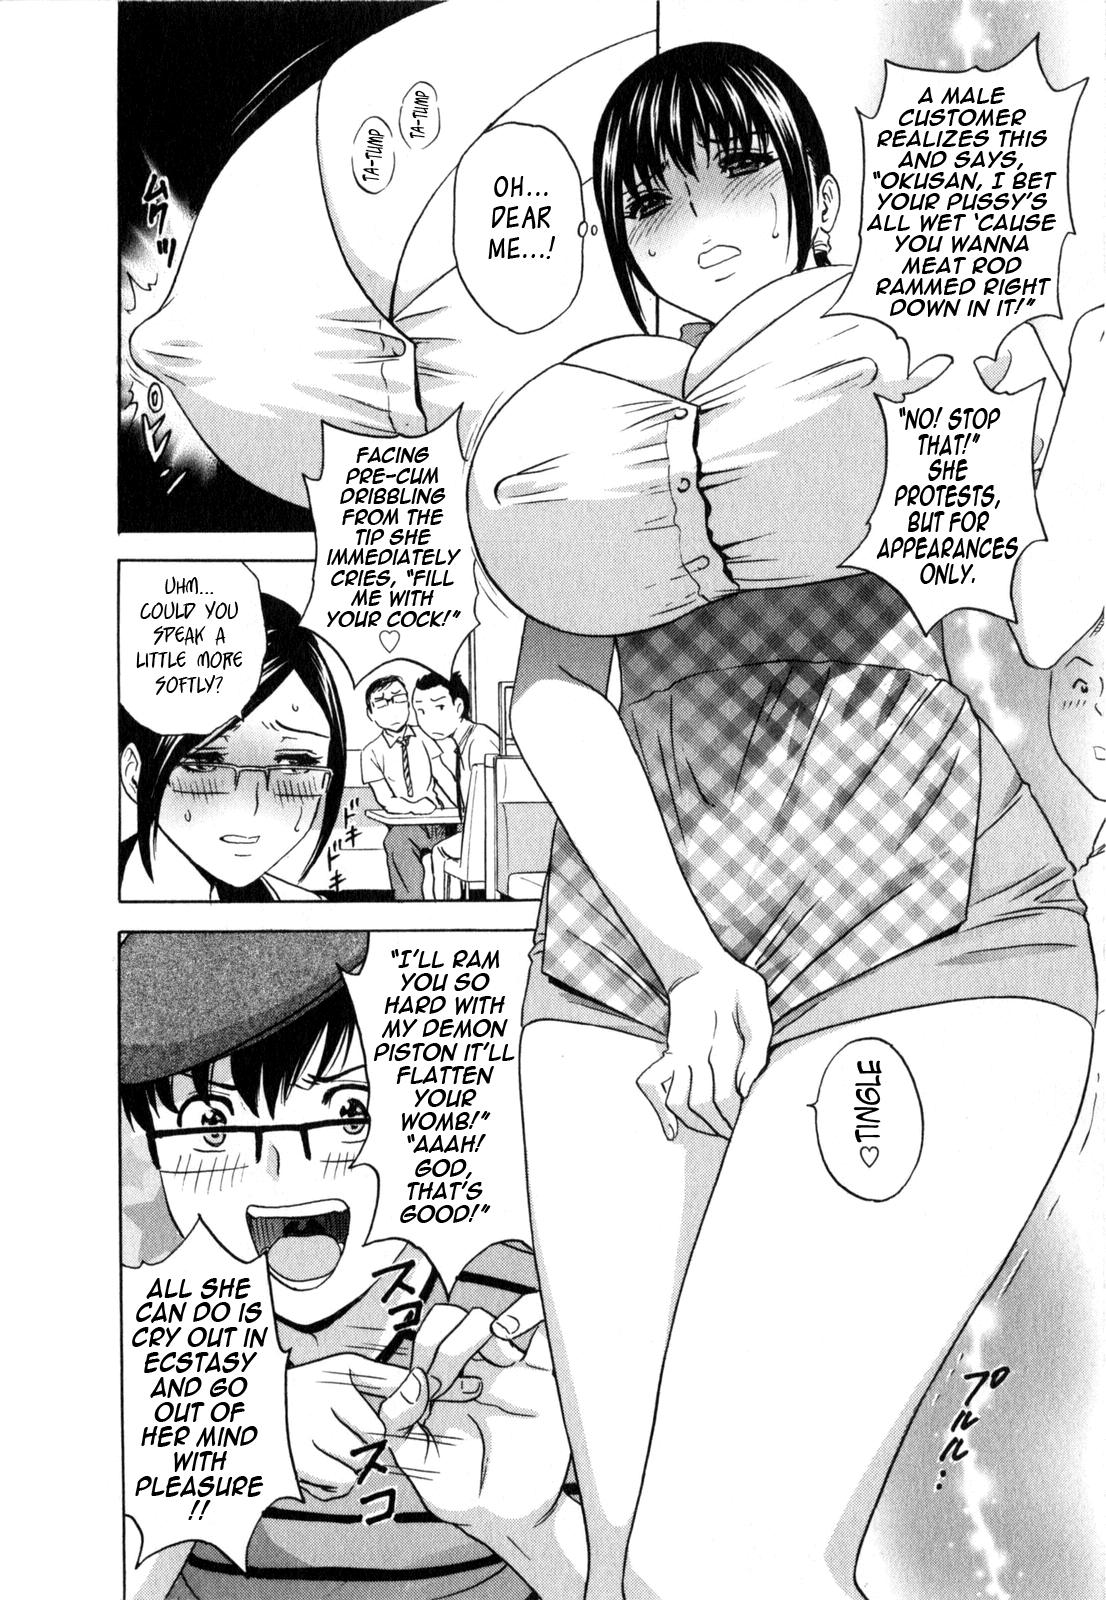 [Hidemaru] Life with Married Women Just Like a Manga 2 - Ch. 1-7 [English] {Tadanohito} 110